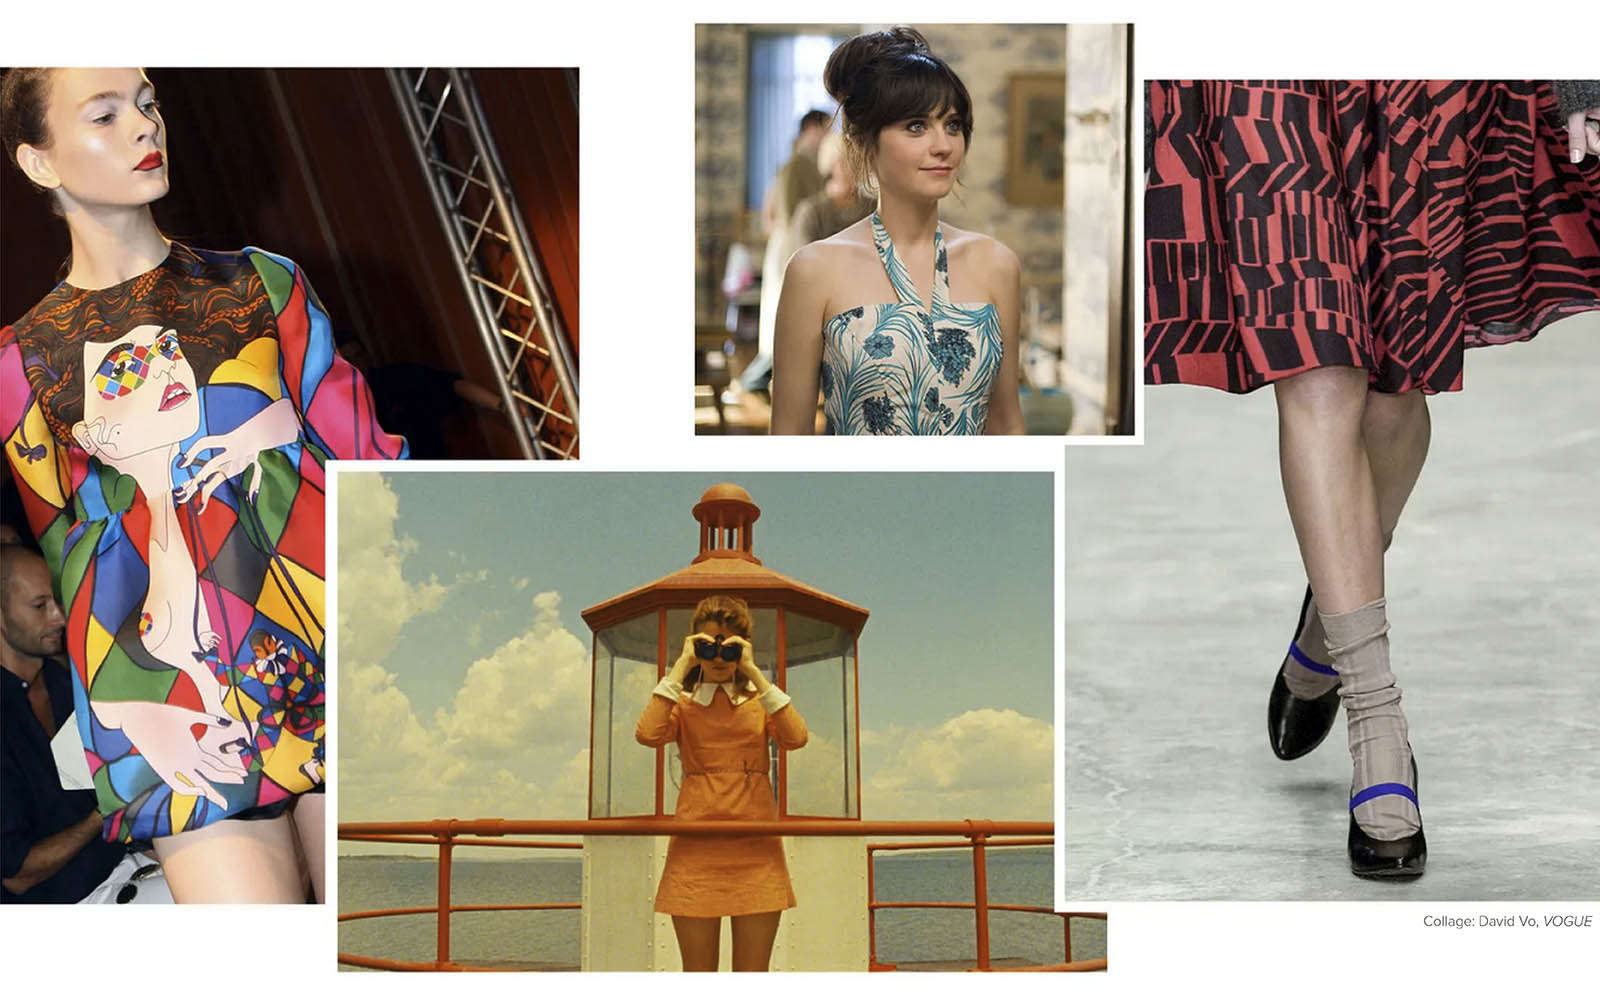 In <em>Vogue:</em> Our Trends Expert on TikTok’s “Twee” Fashion Craze